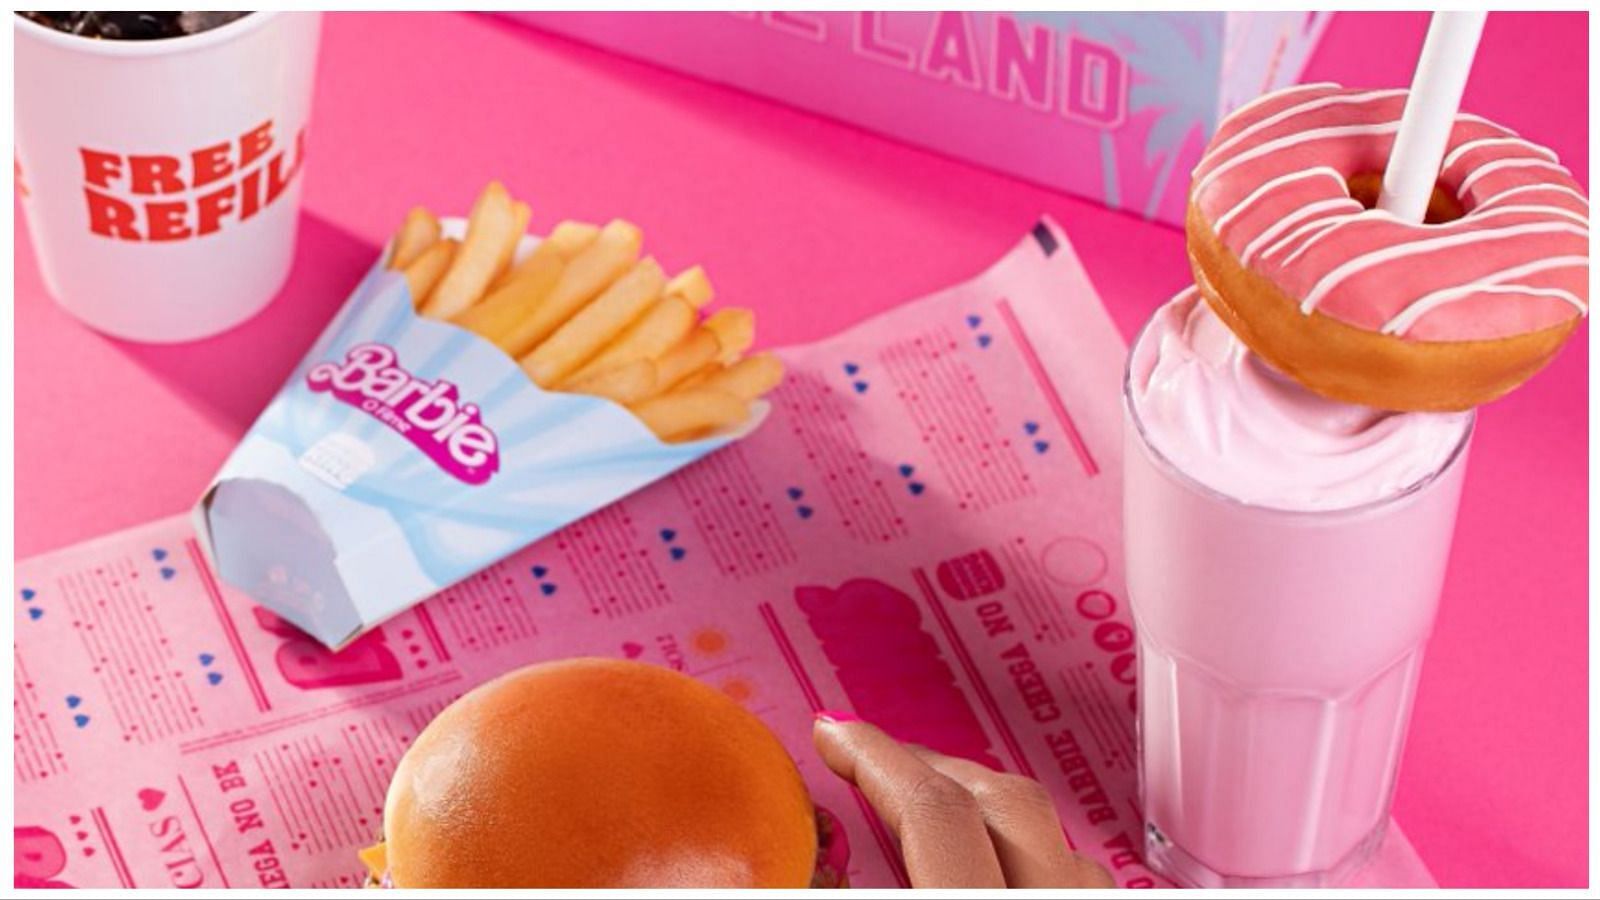 The Barbie burger combo (Image via Twitter/@BurgerKingBR)